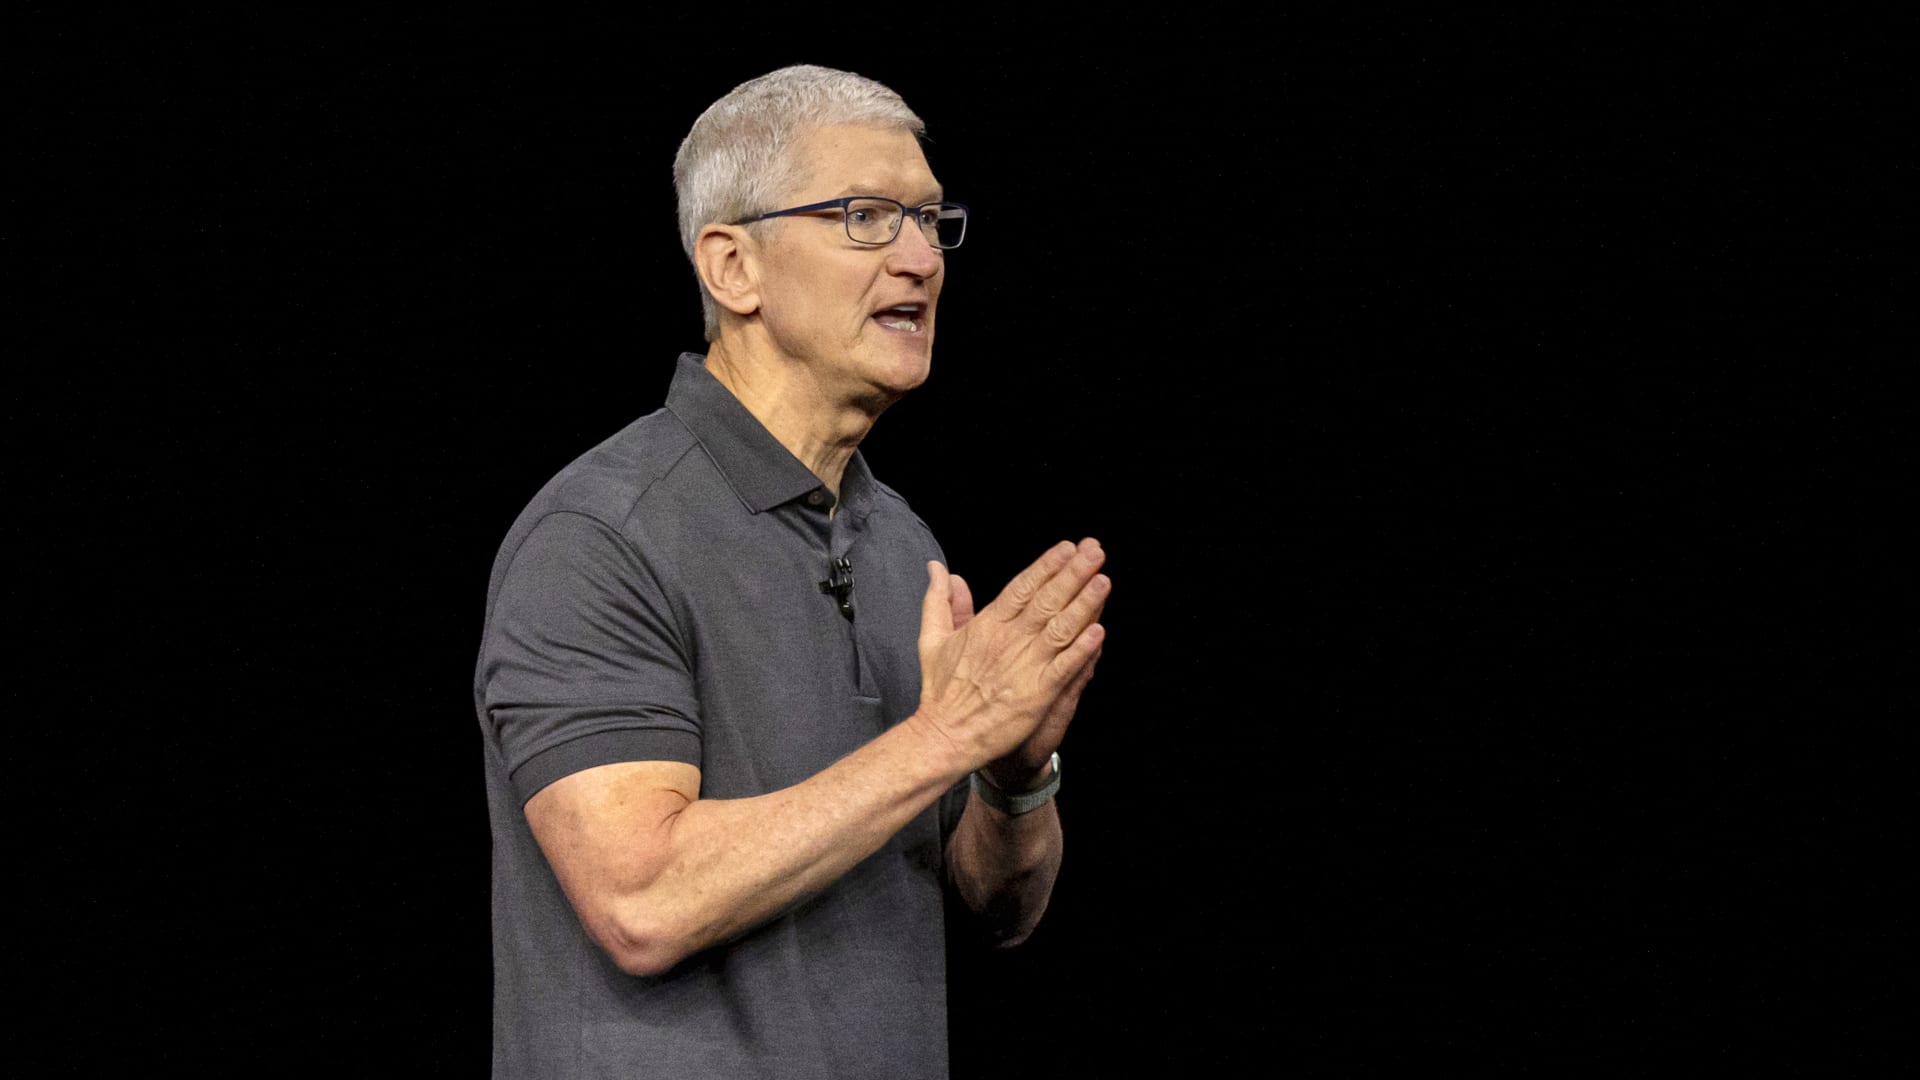 Apple now has 2 billion in cash on hand, slightly less than last quarter